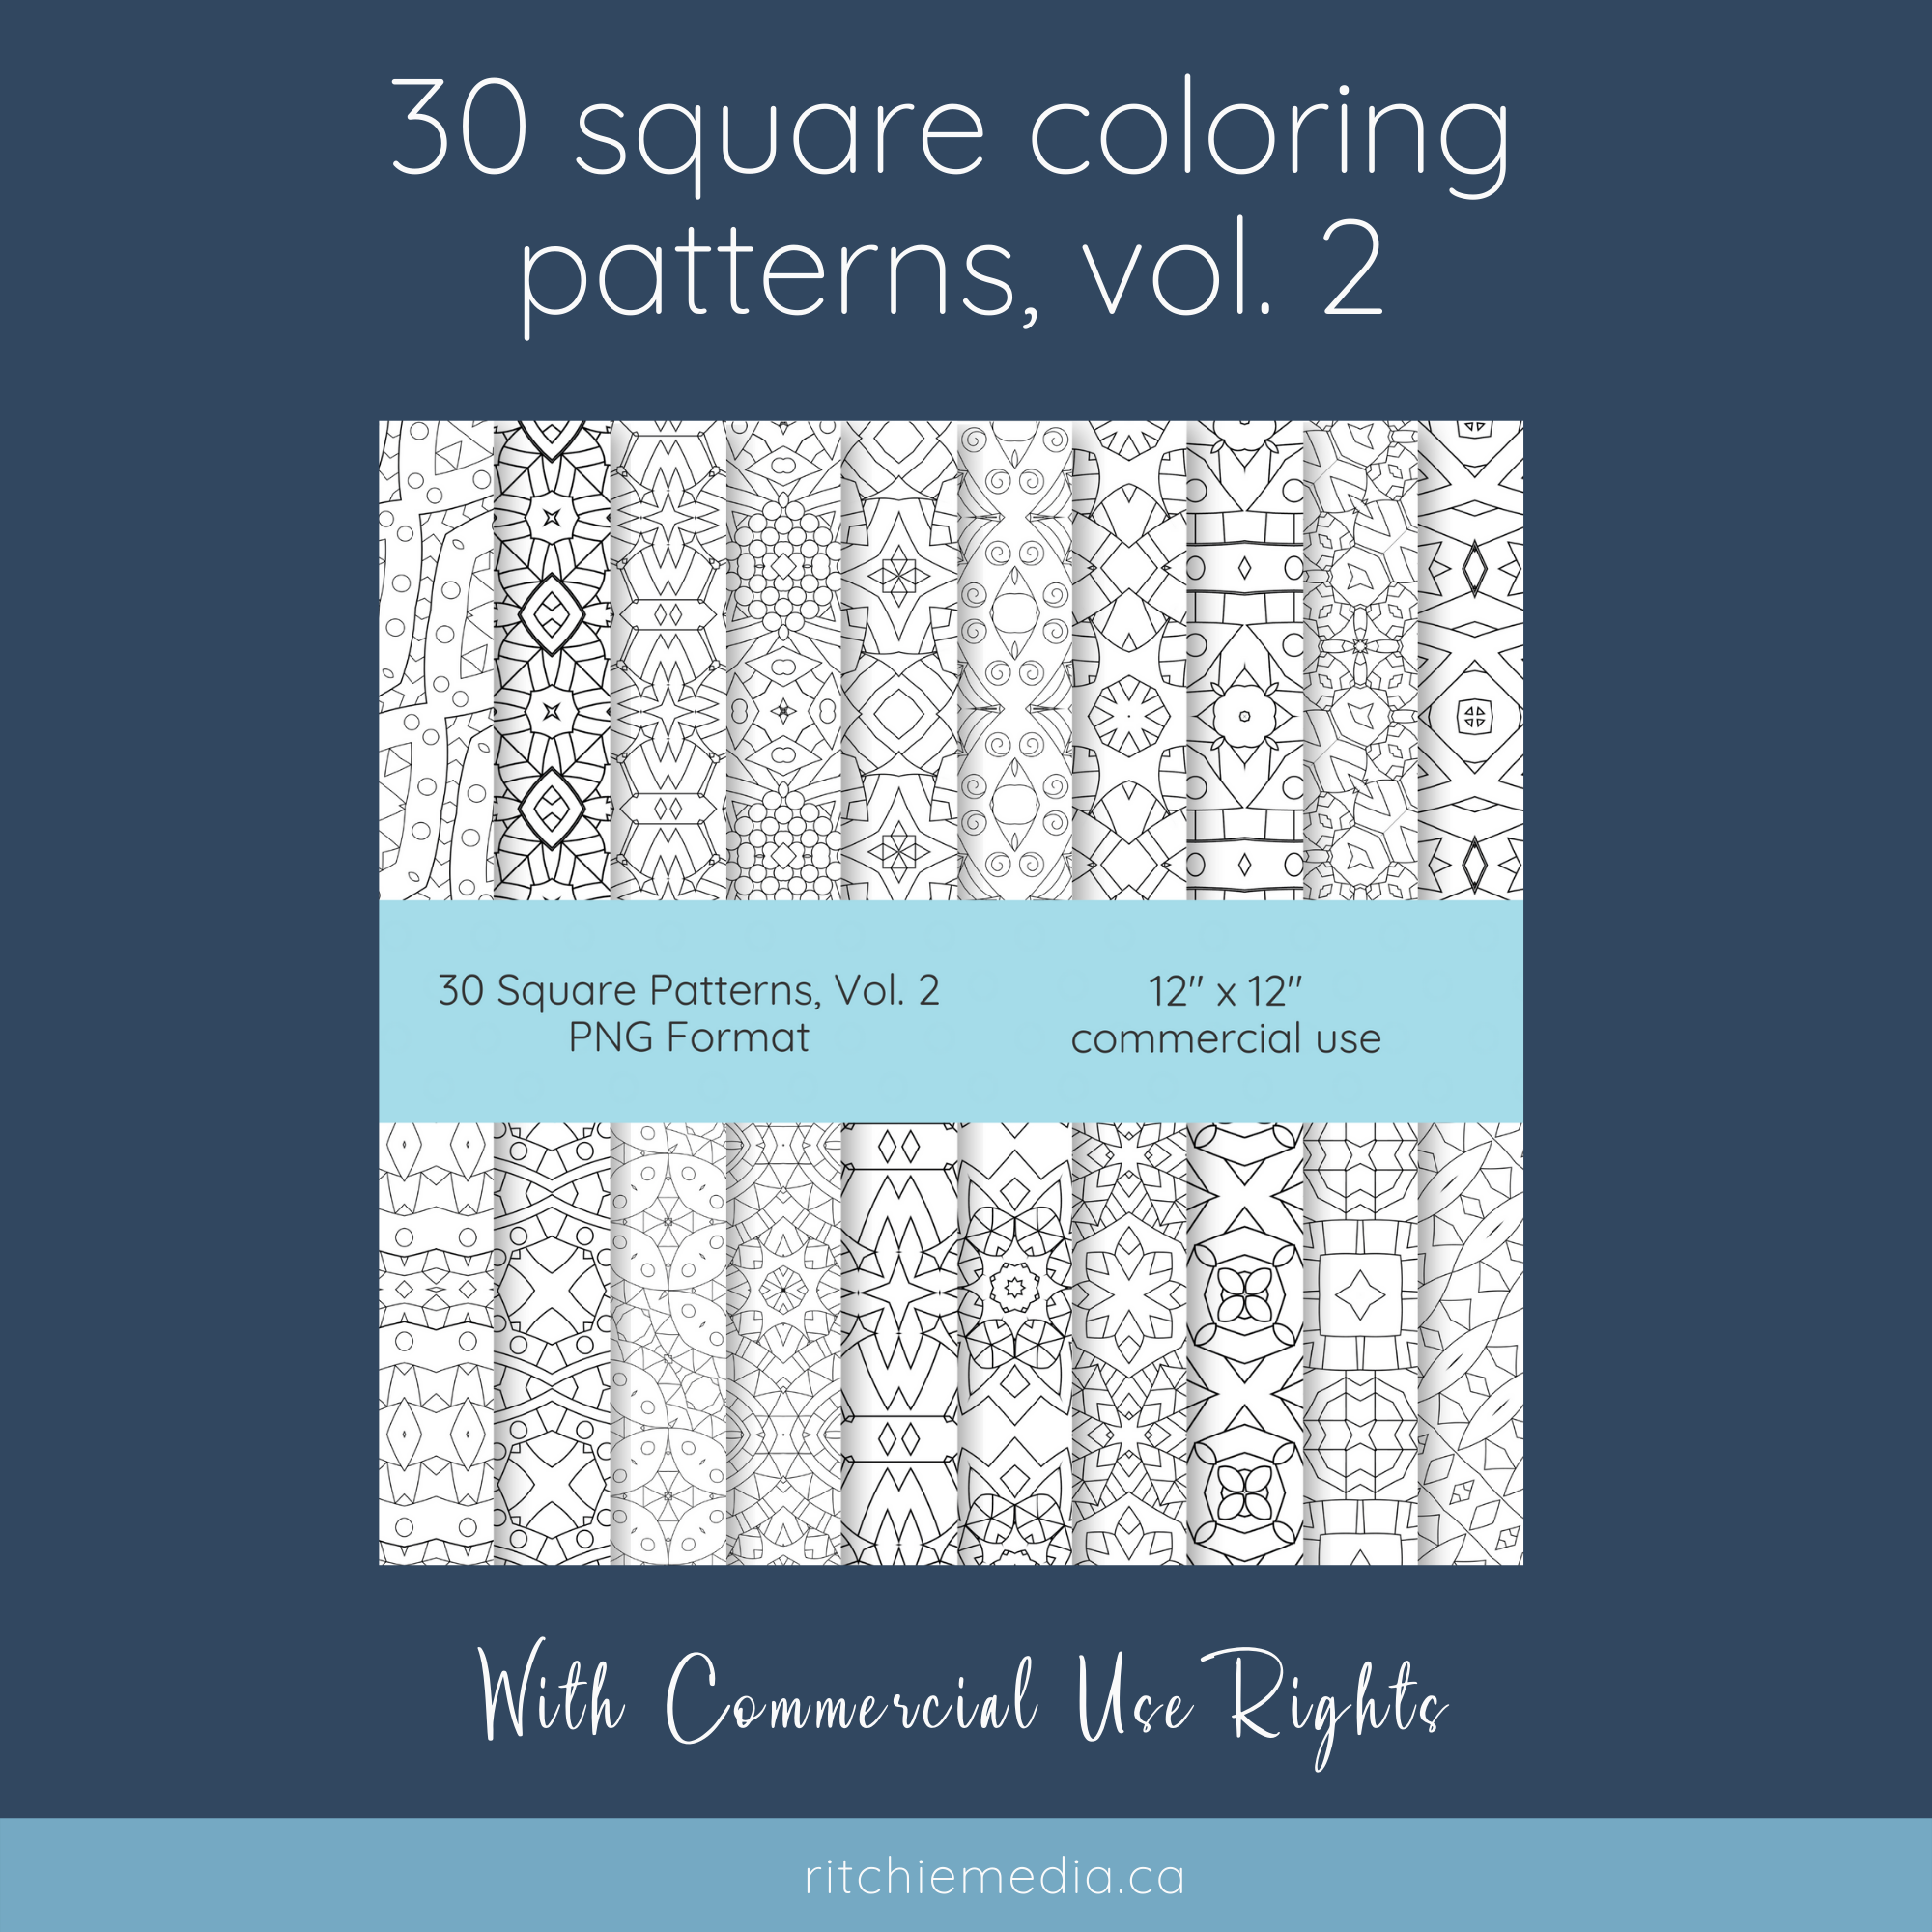 30 square coloring patterns volume 2